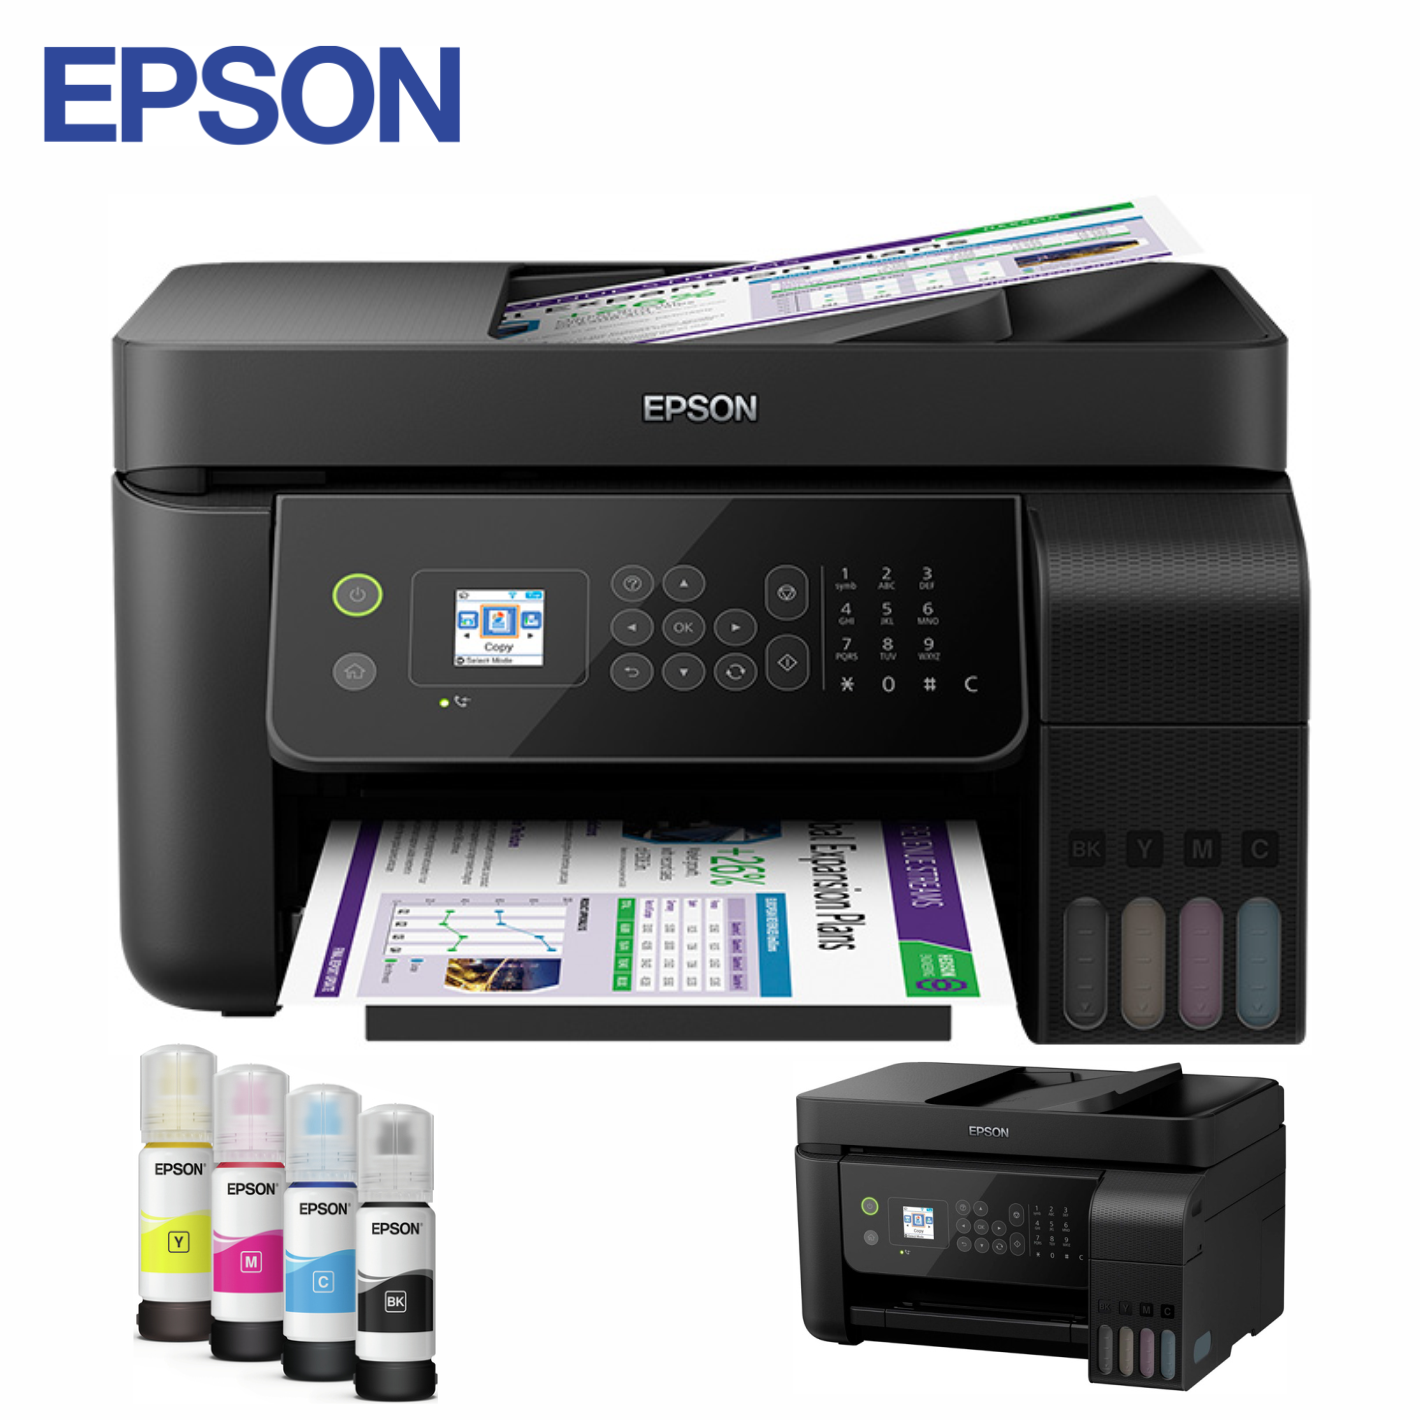 Impresora Epson L5190 Multifuncional de tinta continua, imprime / escanea / copia - Fax / WiFi / USB